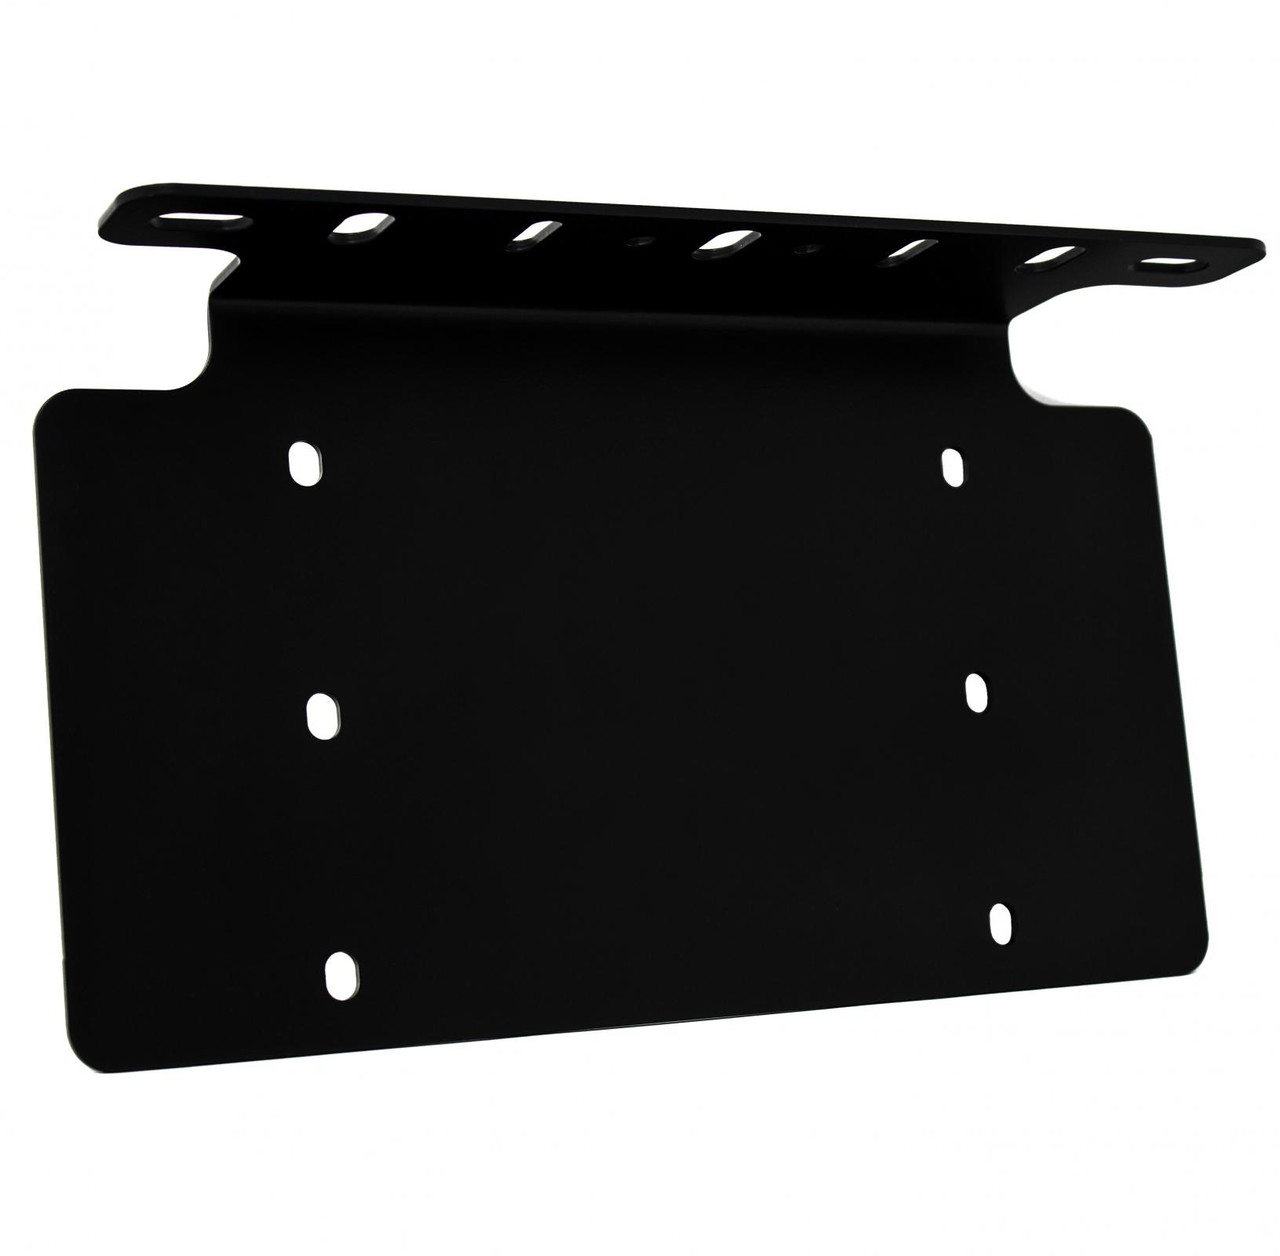 UTV or Motorcycle rear 6 6 Led License Plate Frame - Black